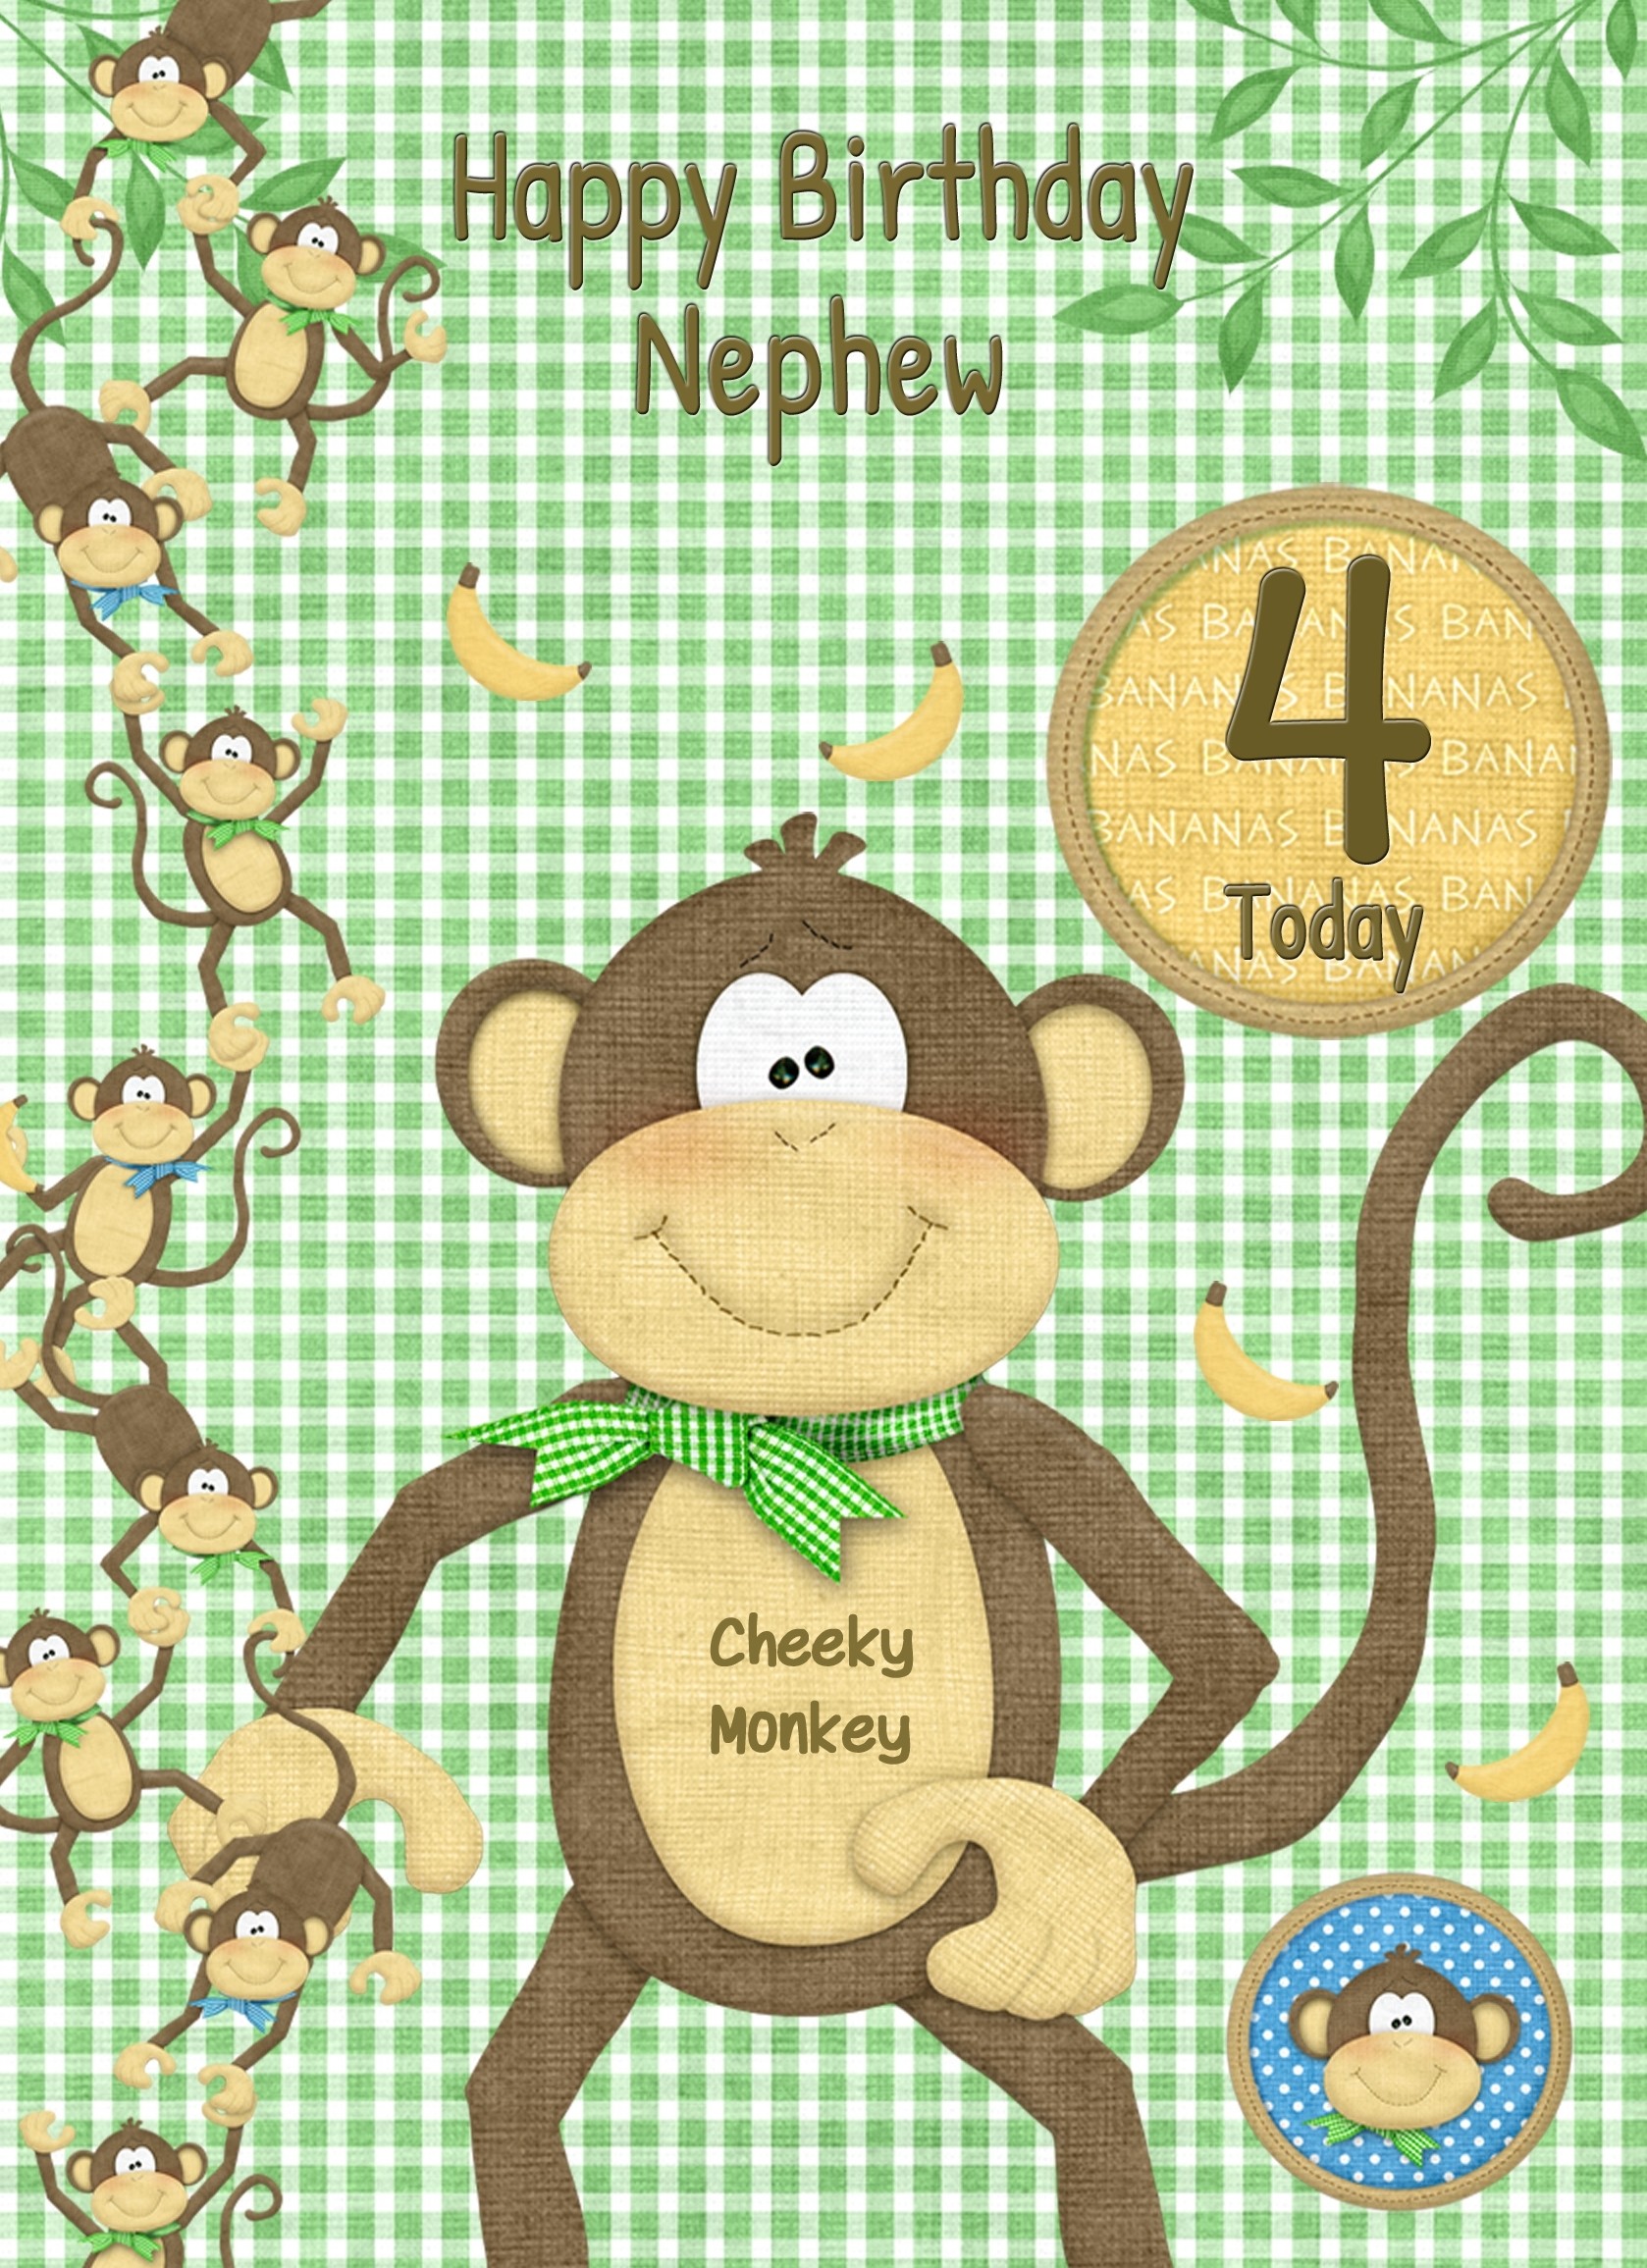 Kids 4th Birthday Cheeky Monkey Cartoon Card for Nephew